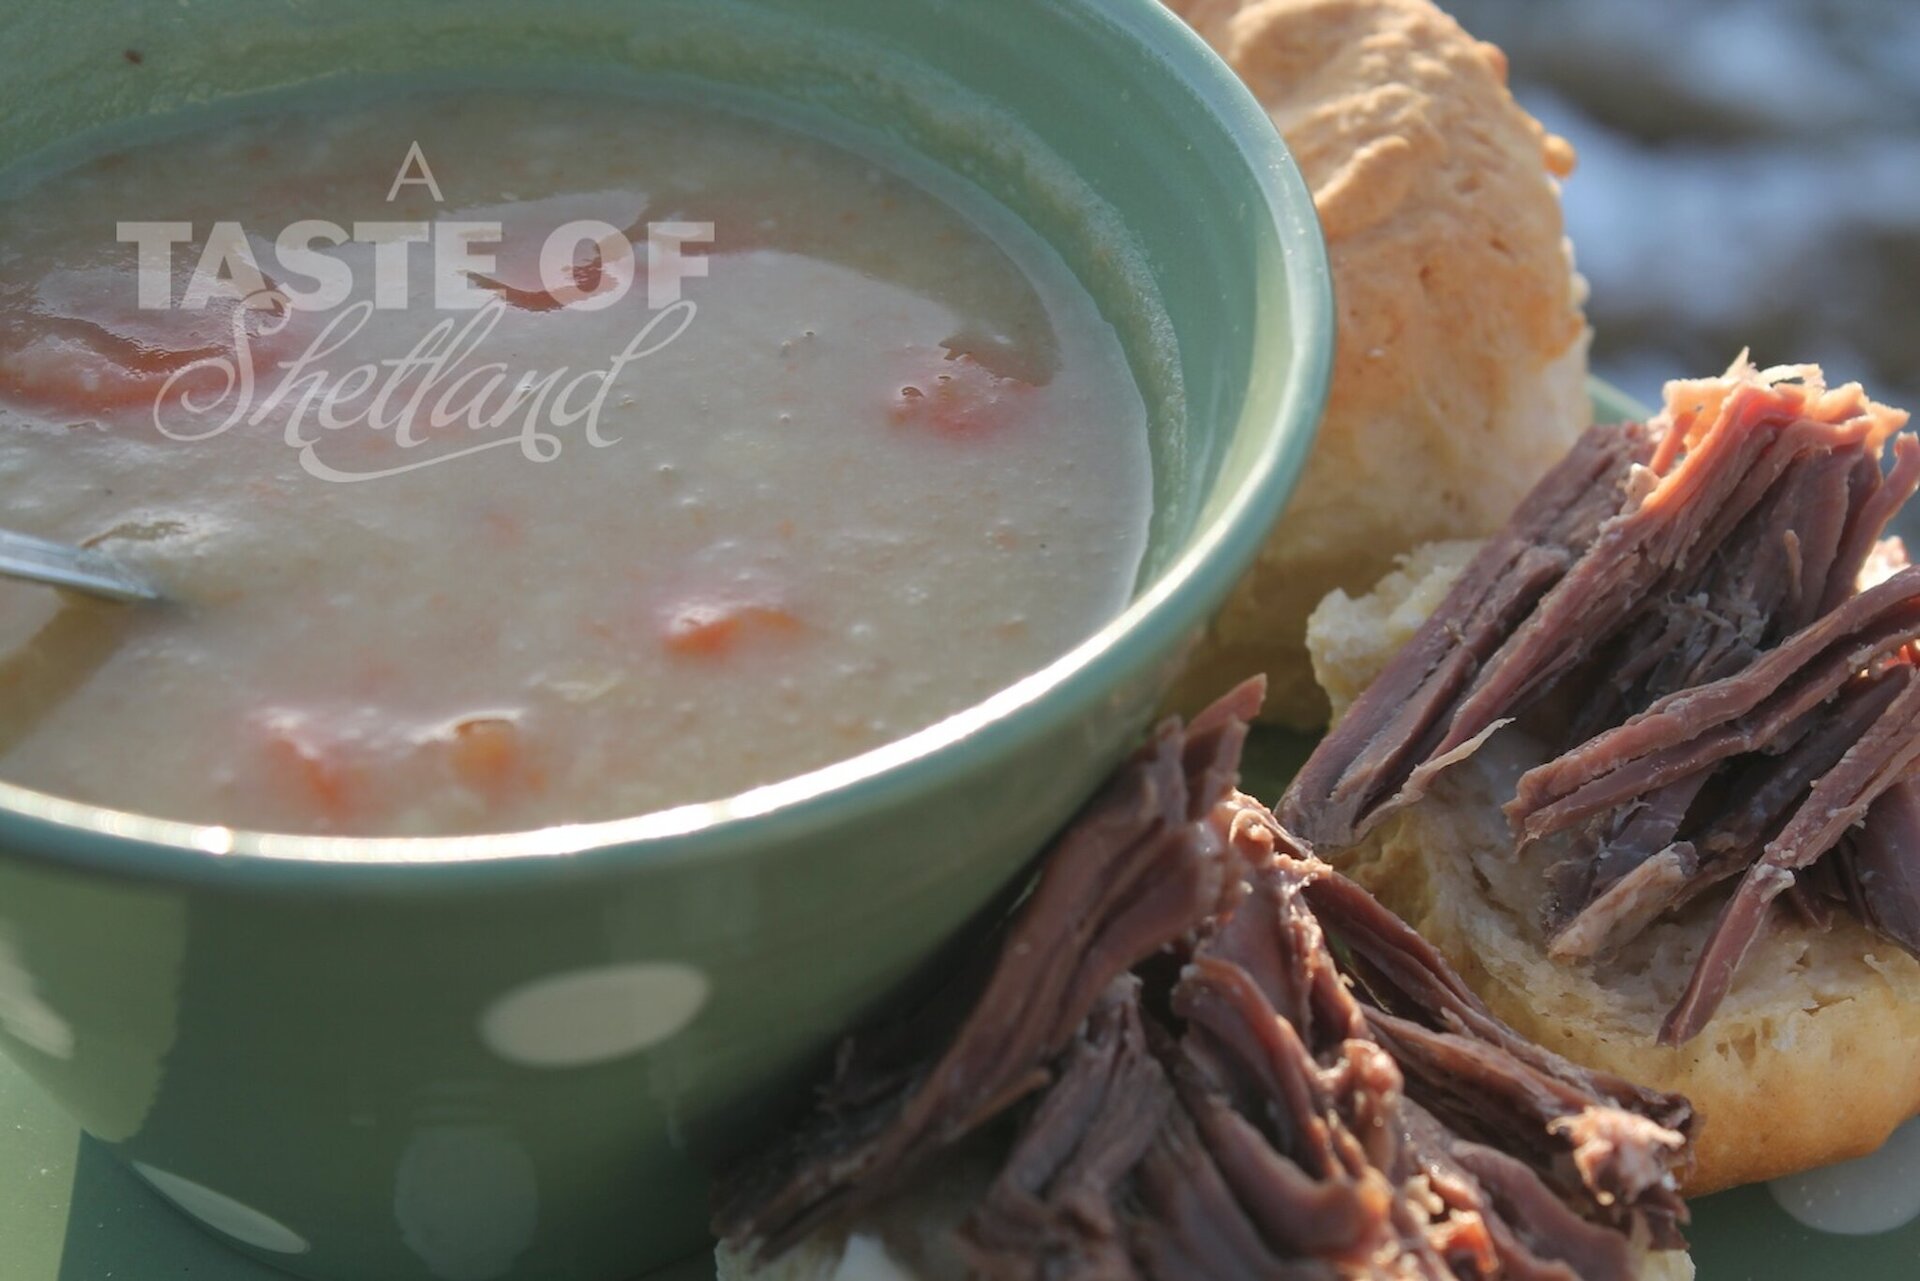 Tattie soup with reestit mutton - a winter favourite in Shetland.